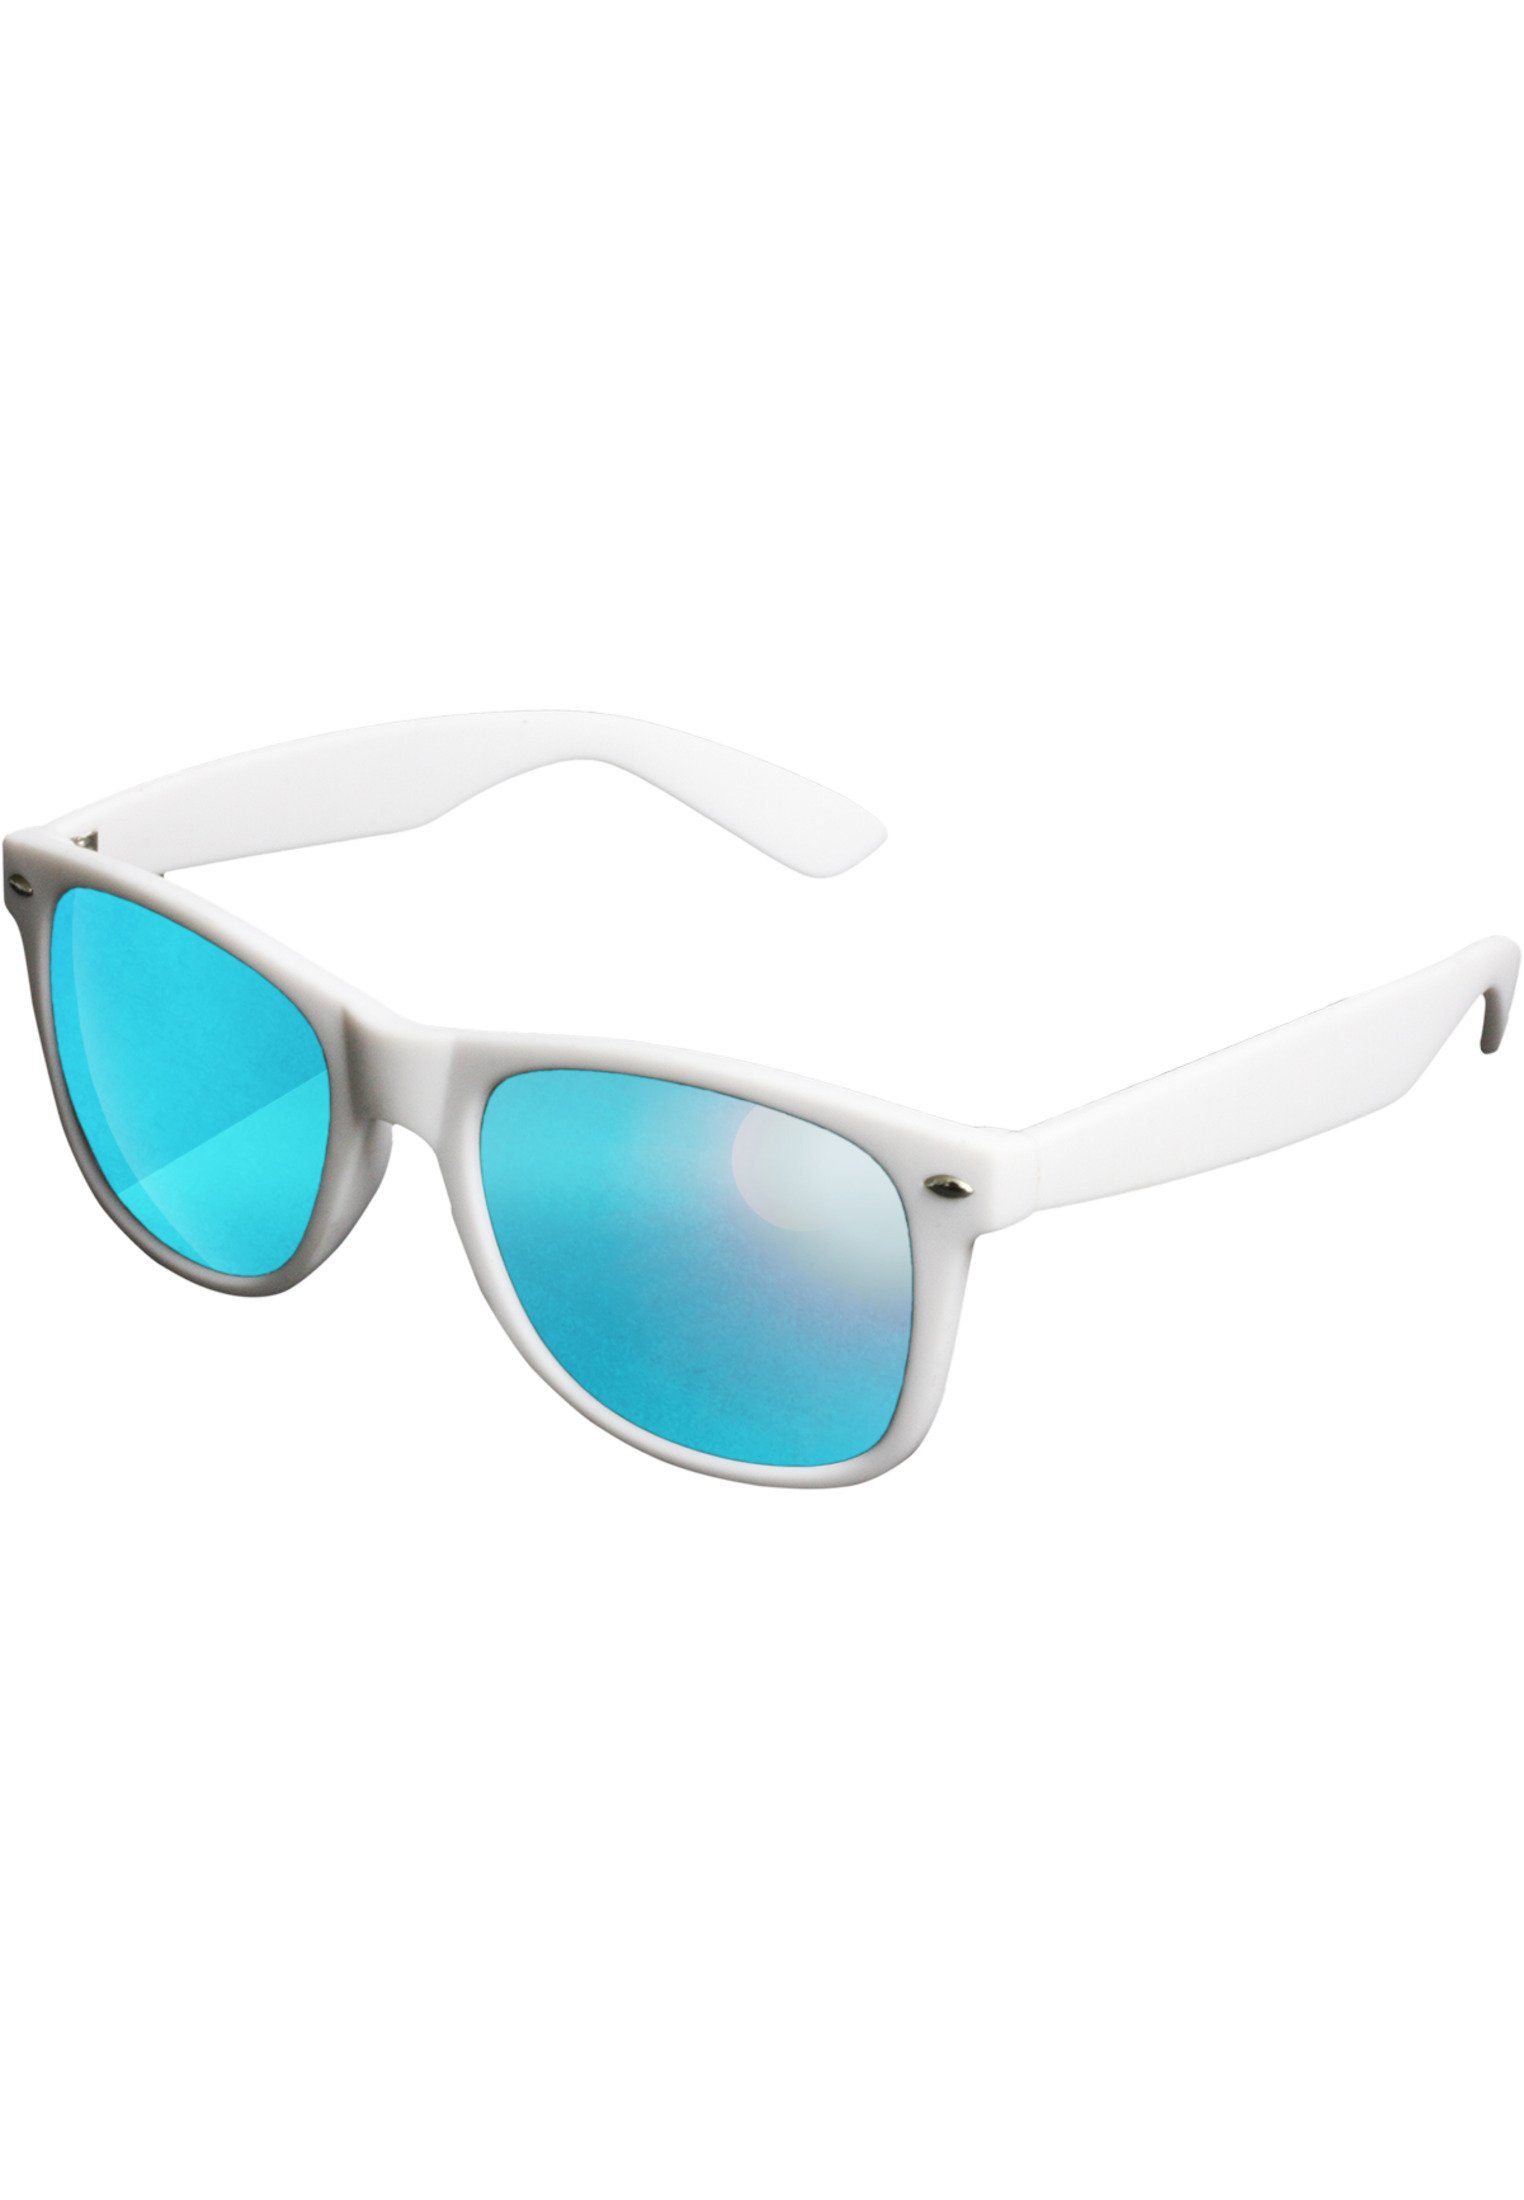 MSTRDS Sonnenbrille Accessoires Sunglasses Likoma Mirror wht/blu